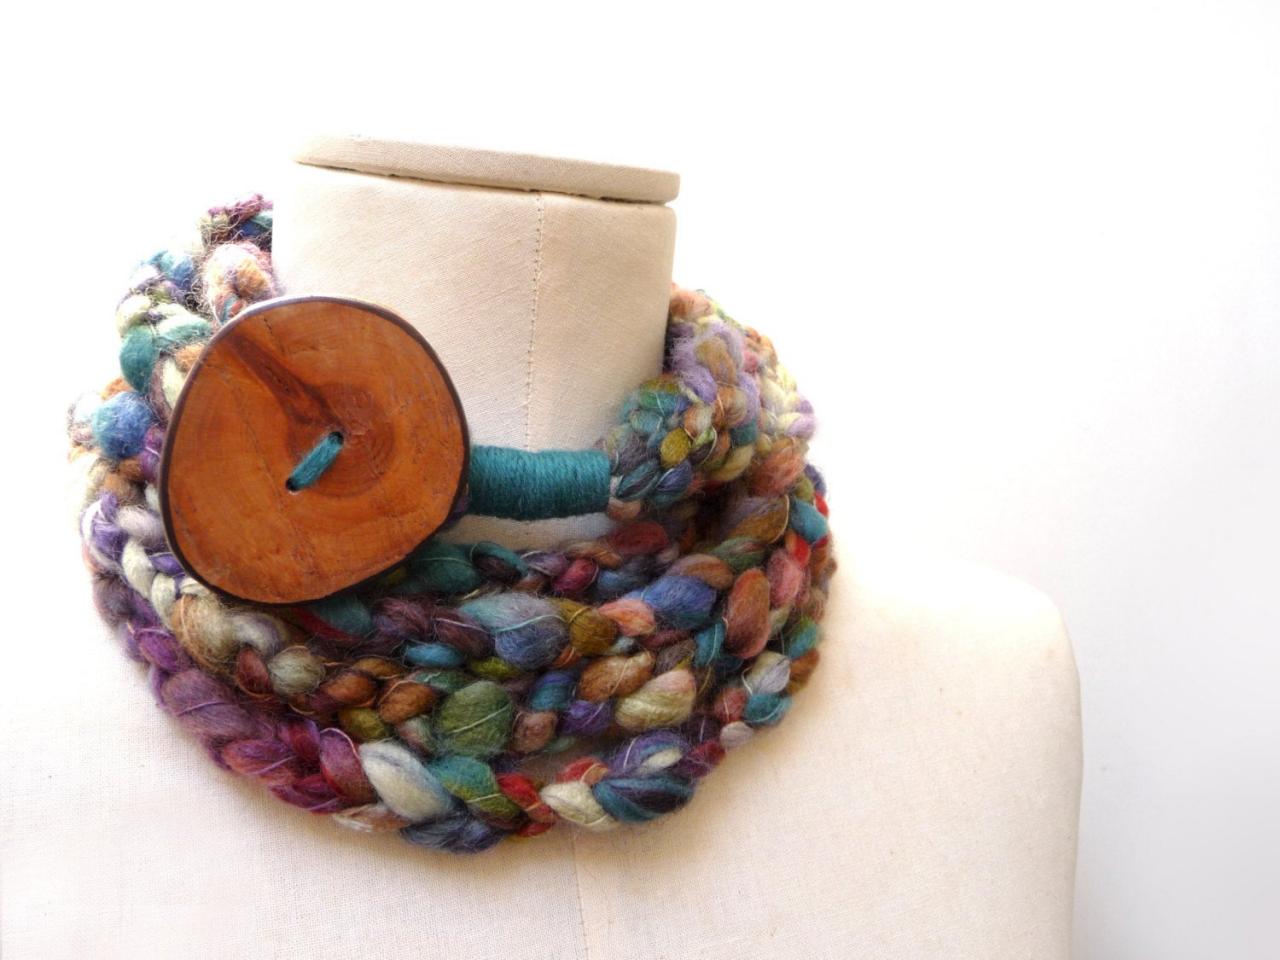 Loop Infinity Scarf Necklace, Crochet Scarflette Neckwarmer - Green, Purple, Blue, Brown Multicolor Yarn With Giant Wood Button